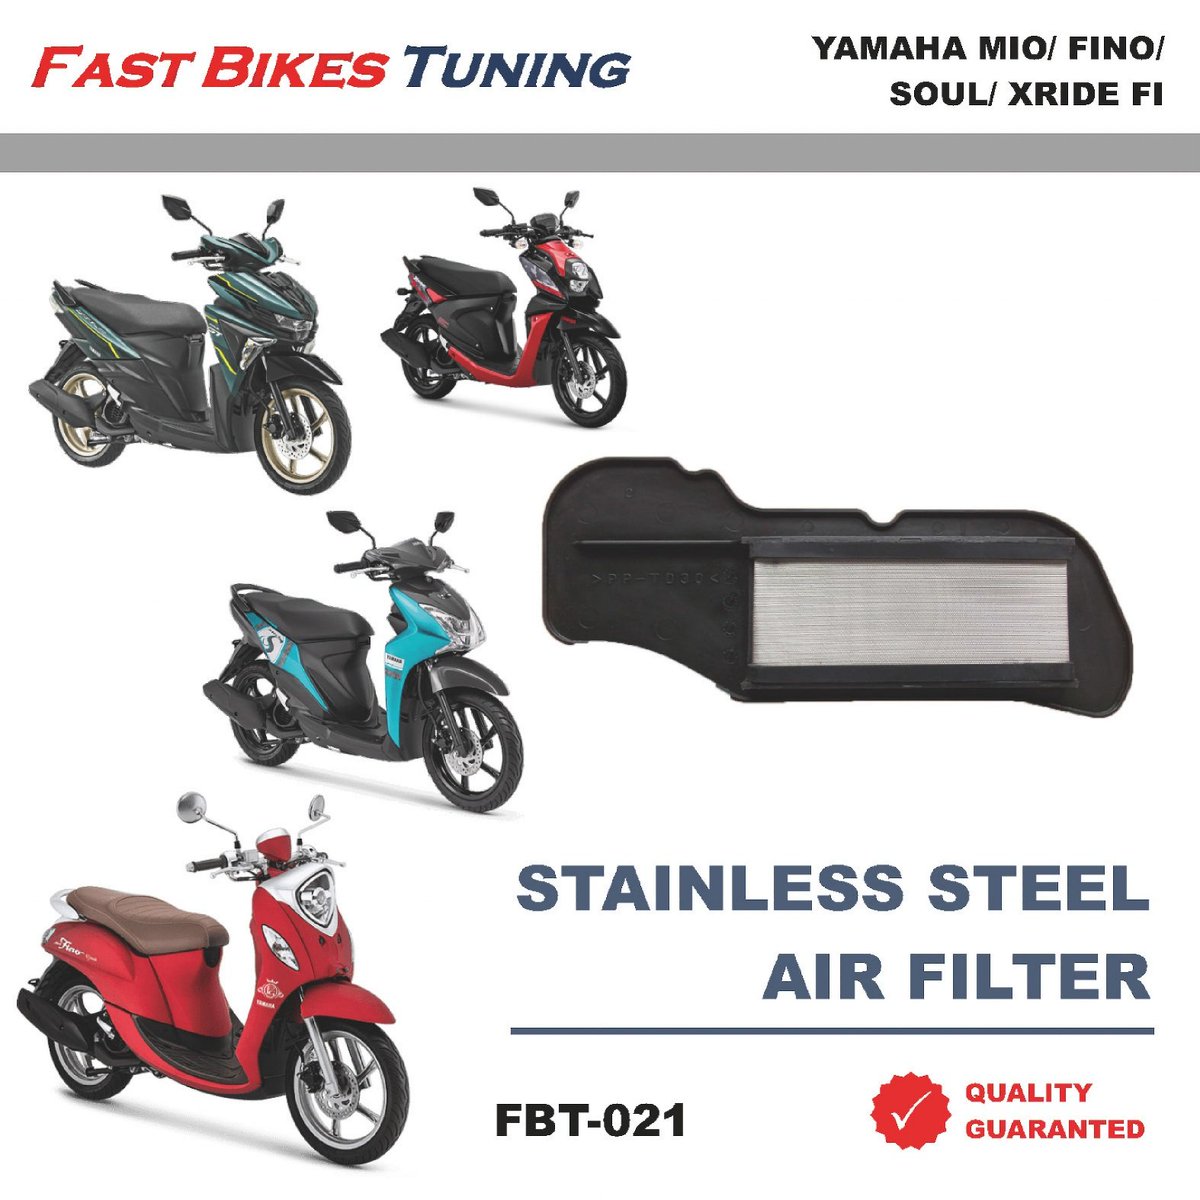 Fast Bikes Tuning Air Filter Yamaha Mio J/Fino/Soul/XRide 115 (FBT-021)
#YAMAHA
#motorcycle 
#airfilter 
#jakarta 
#Singapore 
#BANGKOK 
#KualaLumpur 
#MANILA 
#medan 
#surabaya 
#denpasar
#Bandung 
#Semarang 
#yogyakarta 
#makasar
#depok 
#tangerang